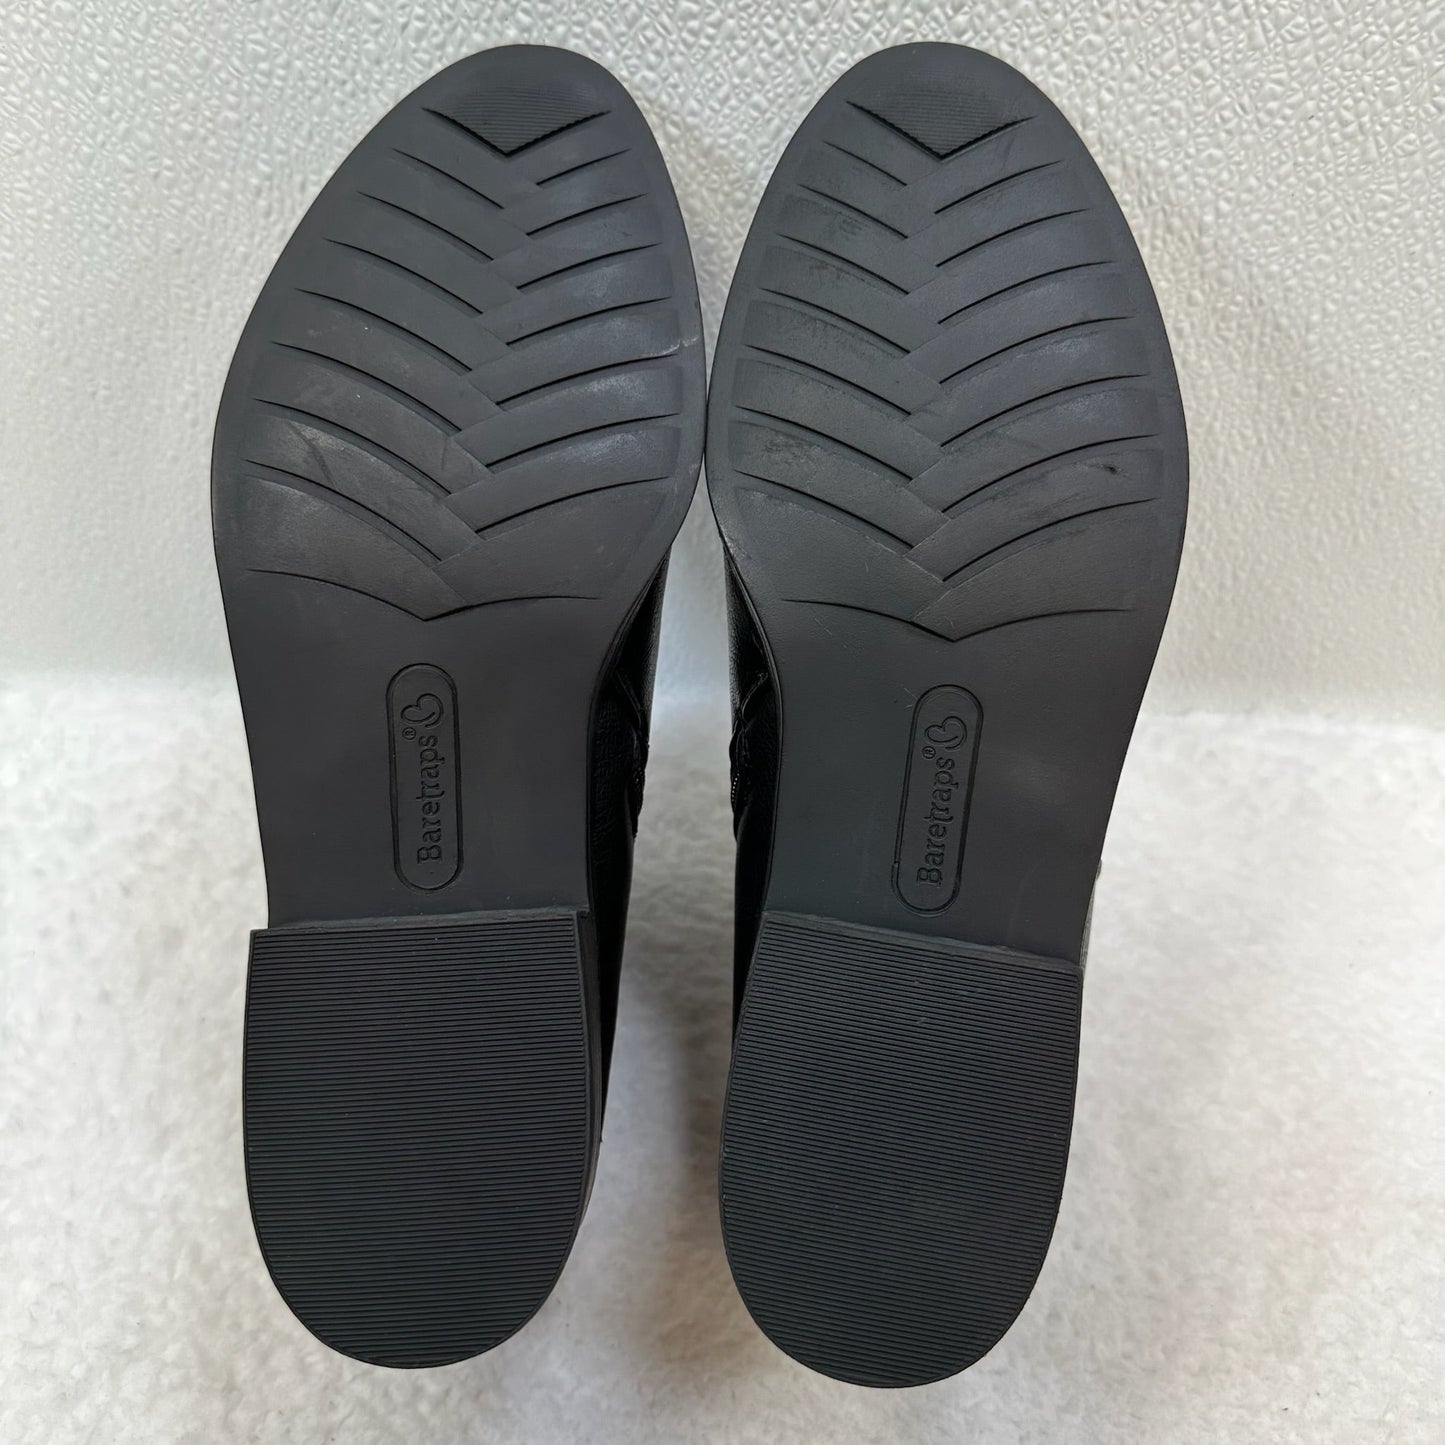 Black Boots Ankle Flats Bare Traps, Size 9.5